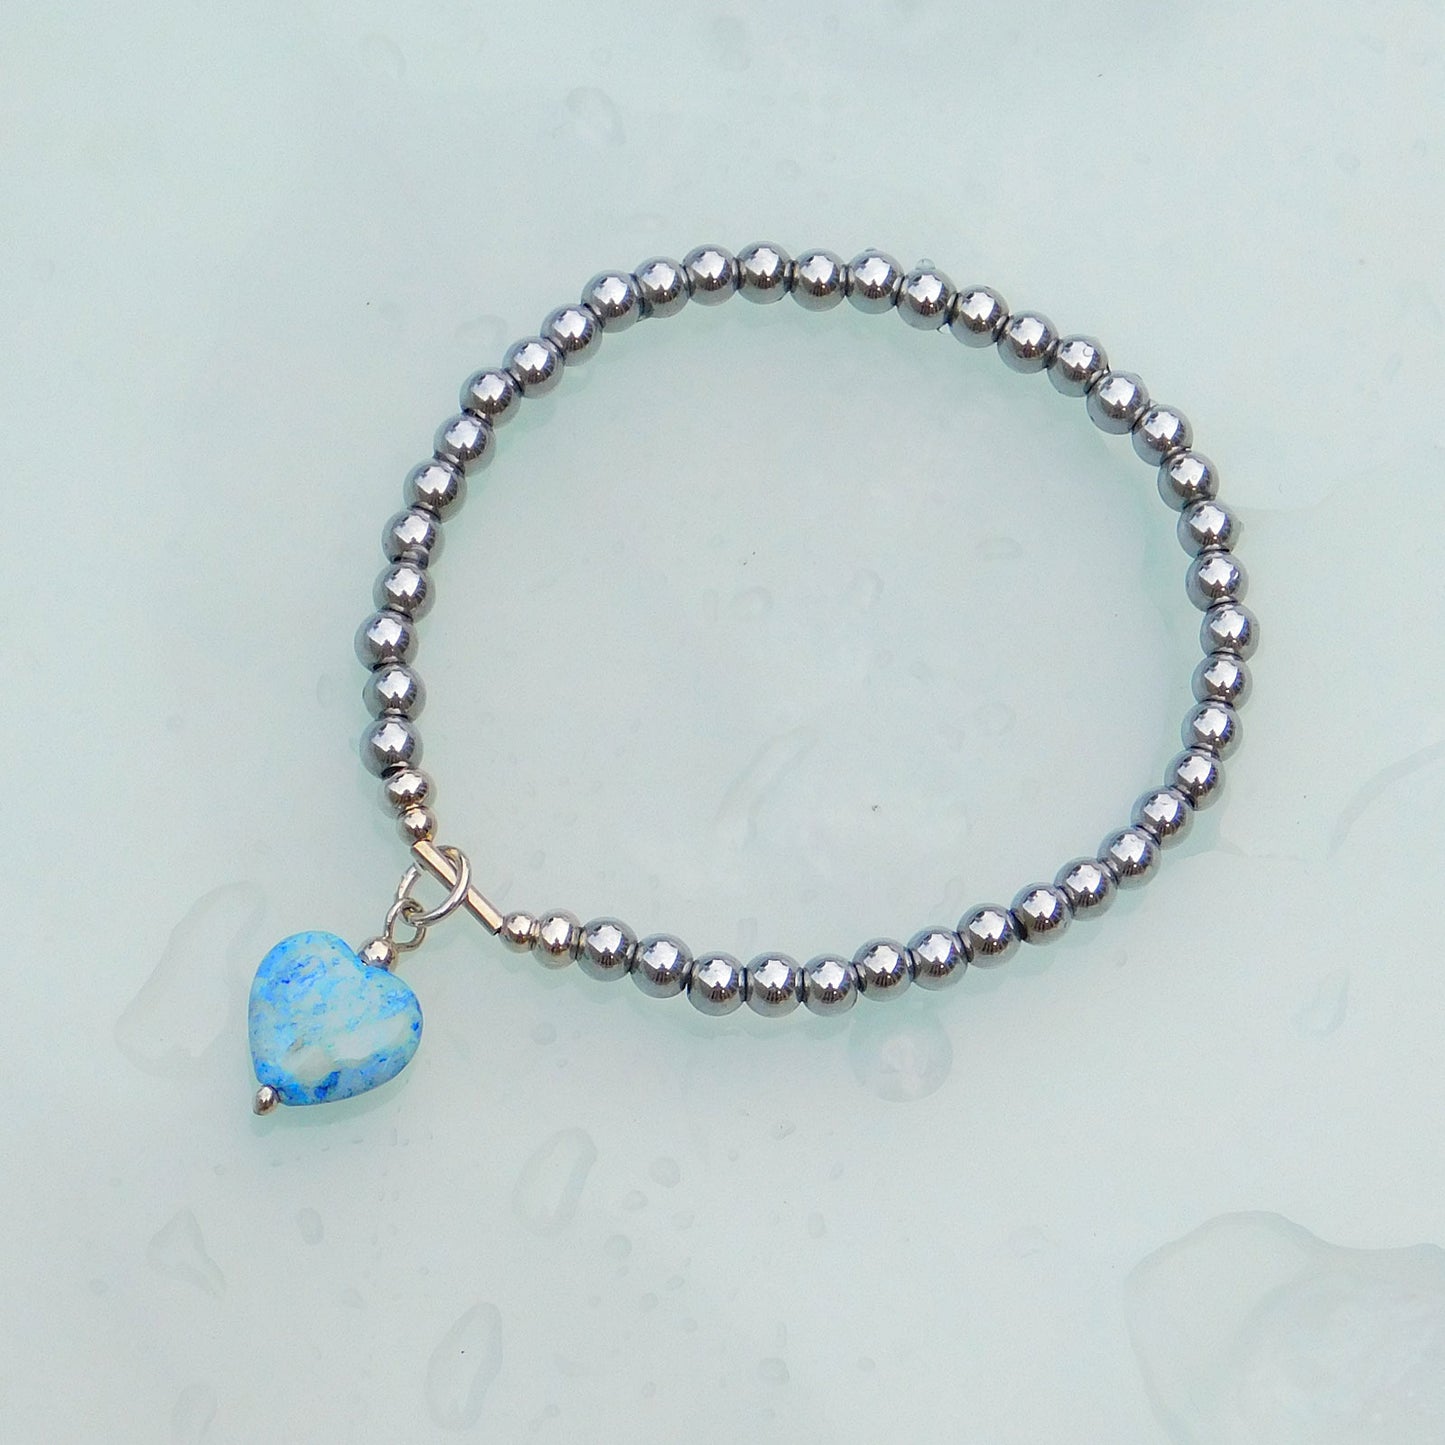 Blue fossil heart charm bracelet